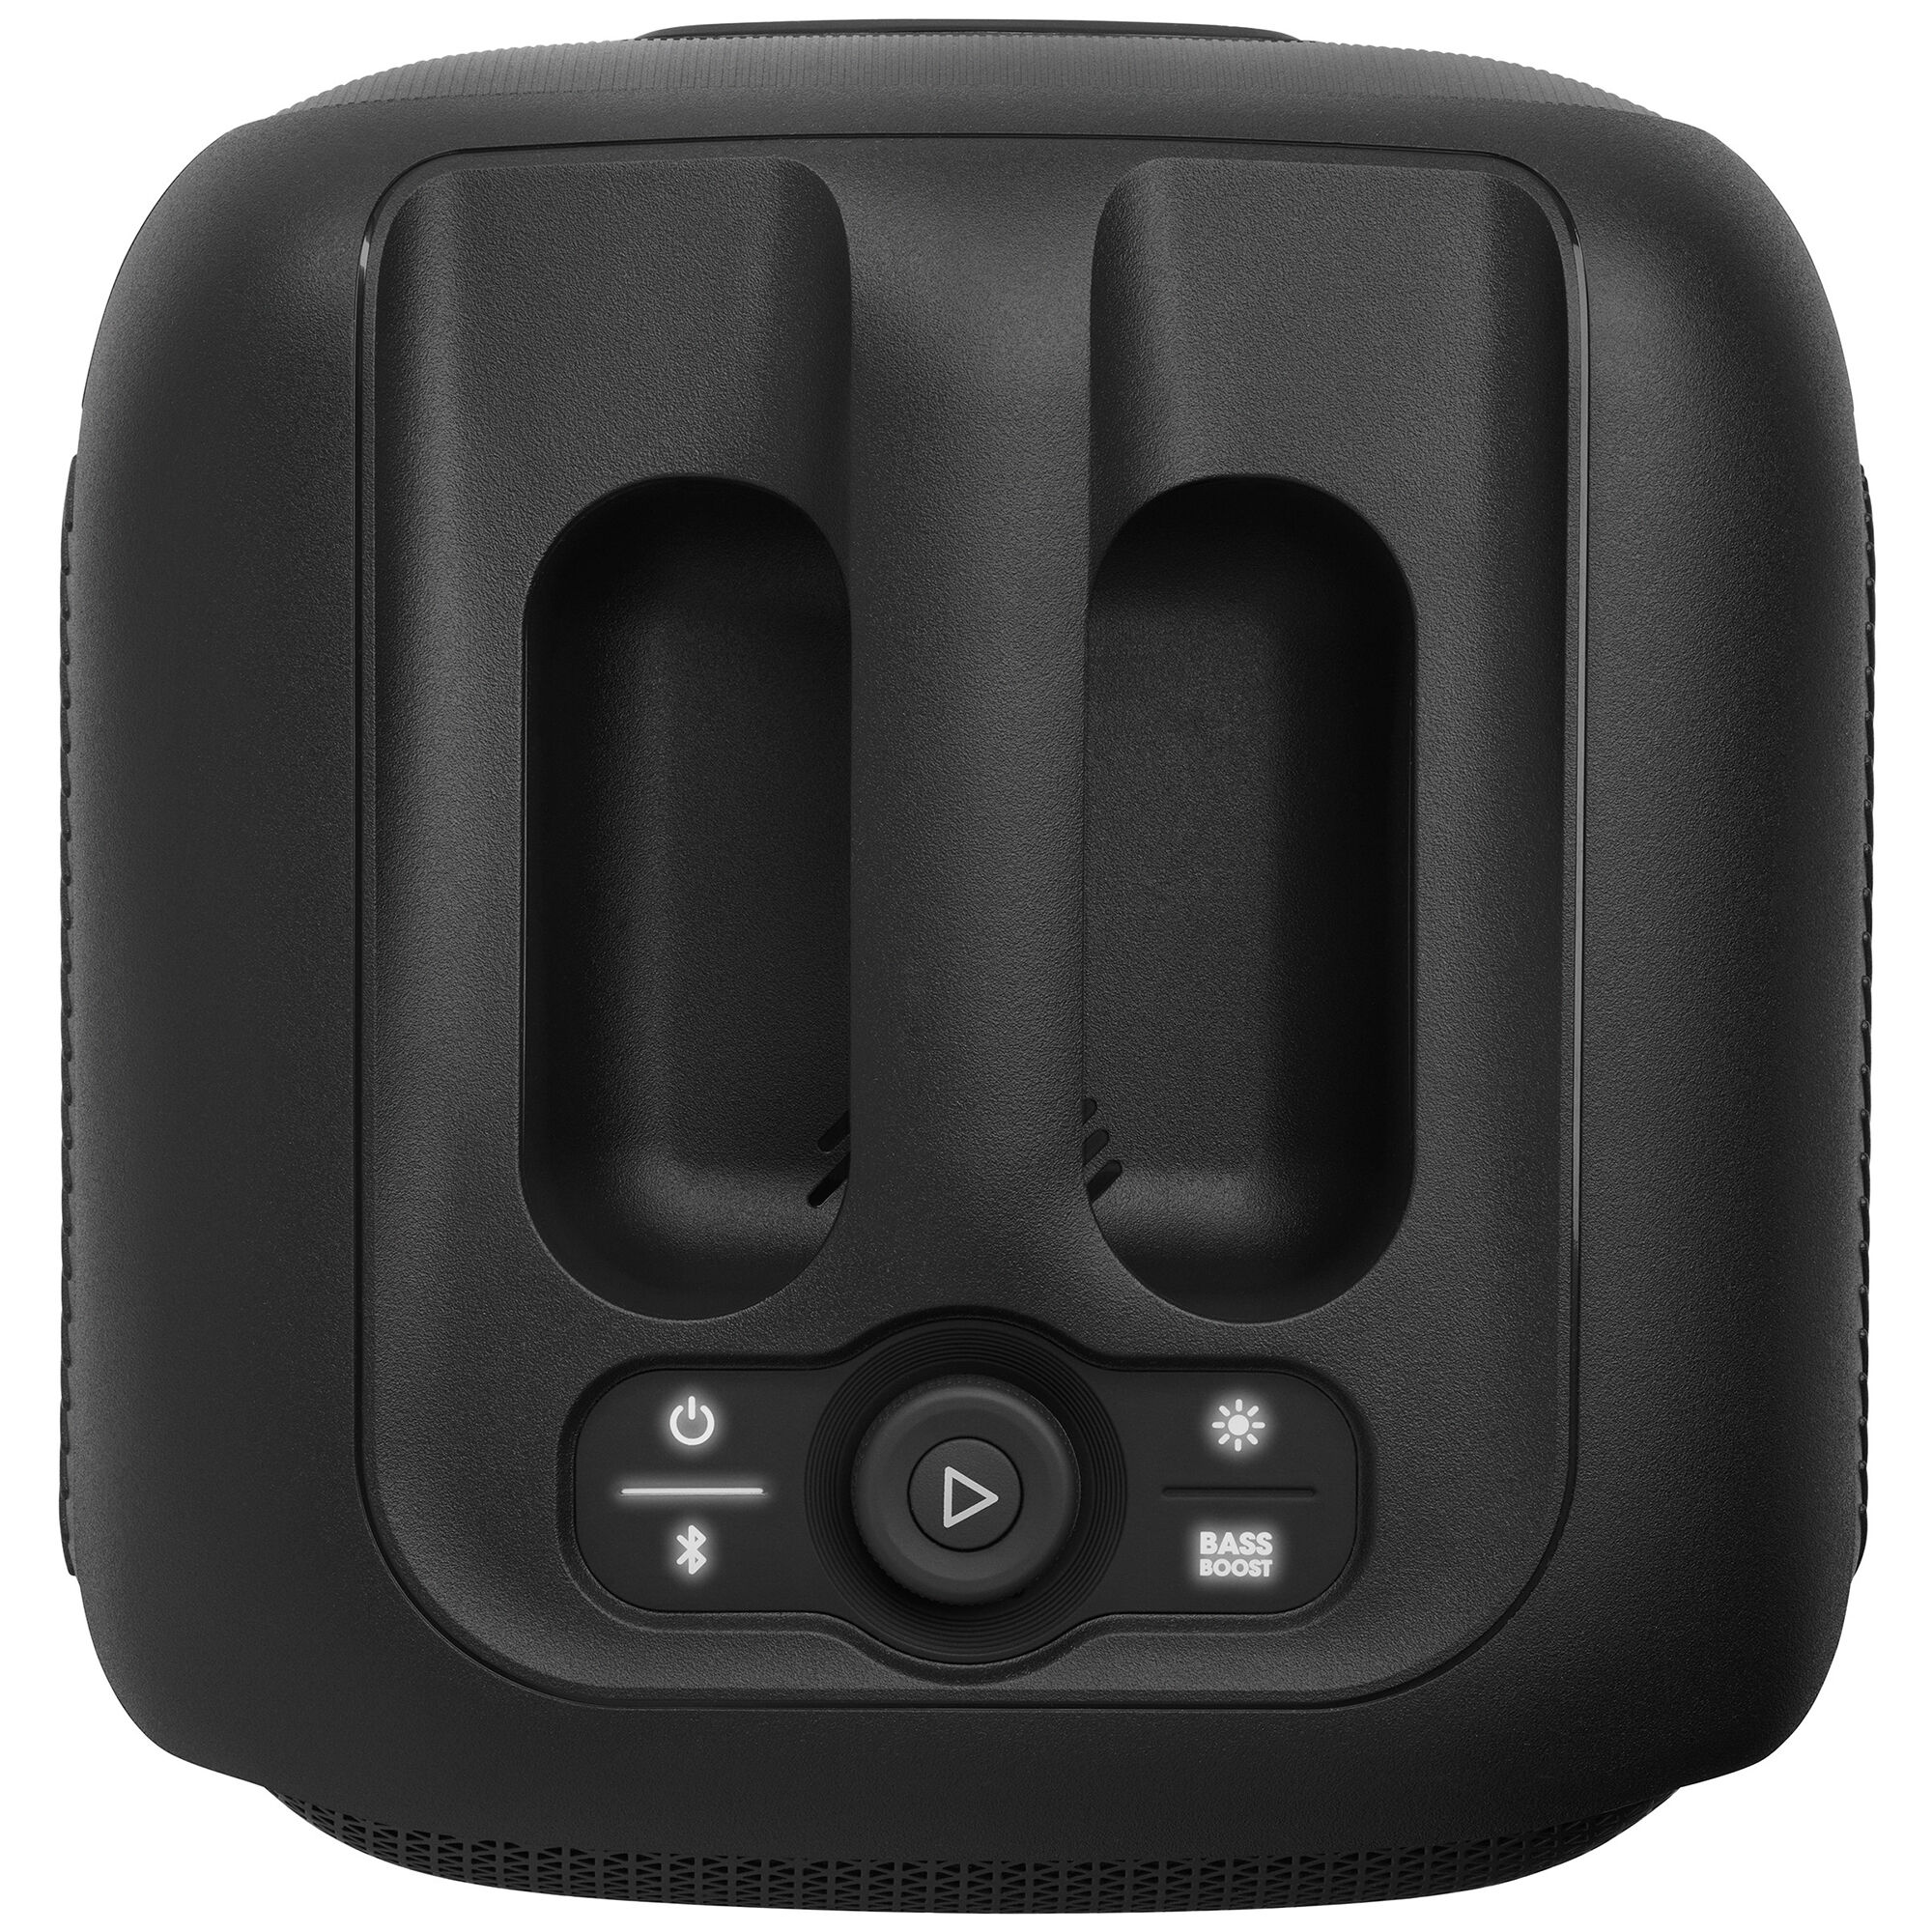 JBL PartyBox Encore Essential Wireless Bluetooth Speaker | P.C.